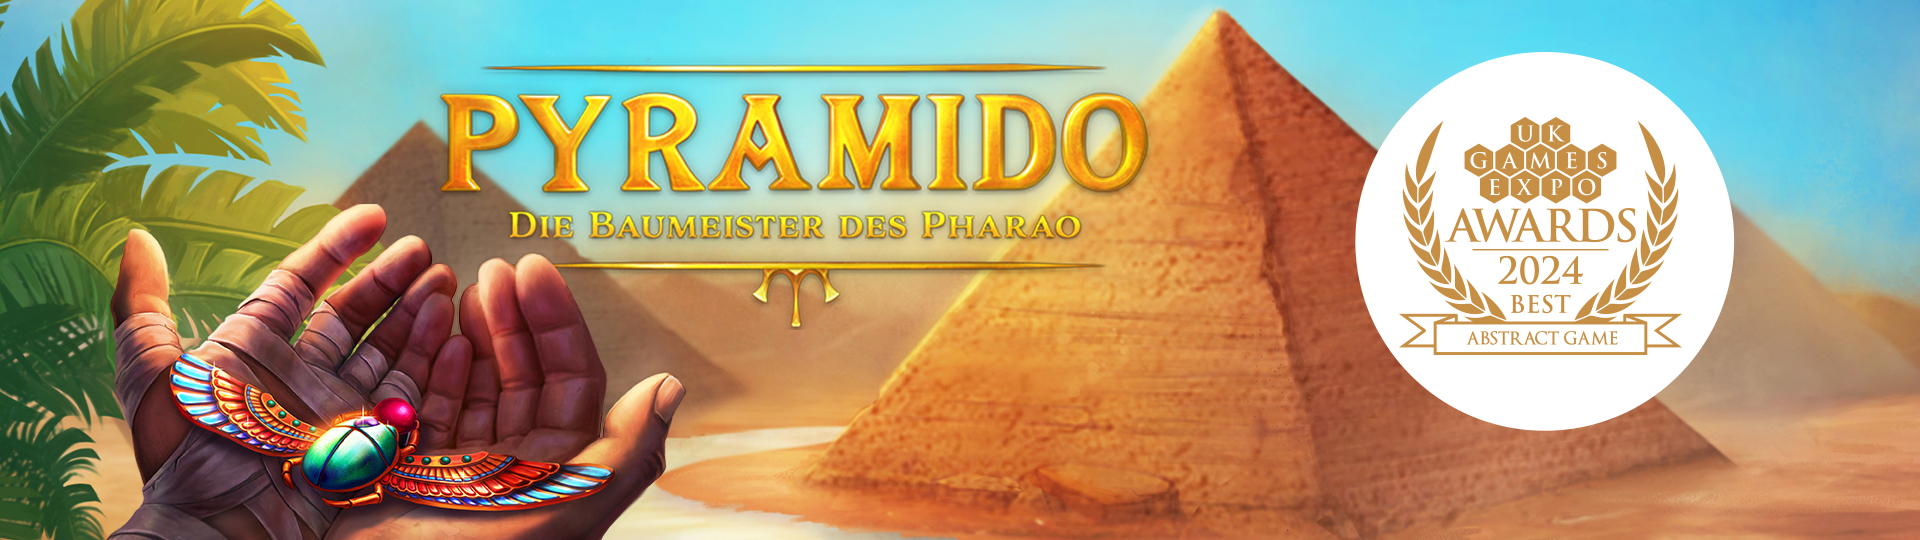 Pyramido UK Games Expo Award